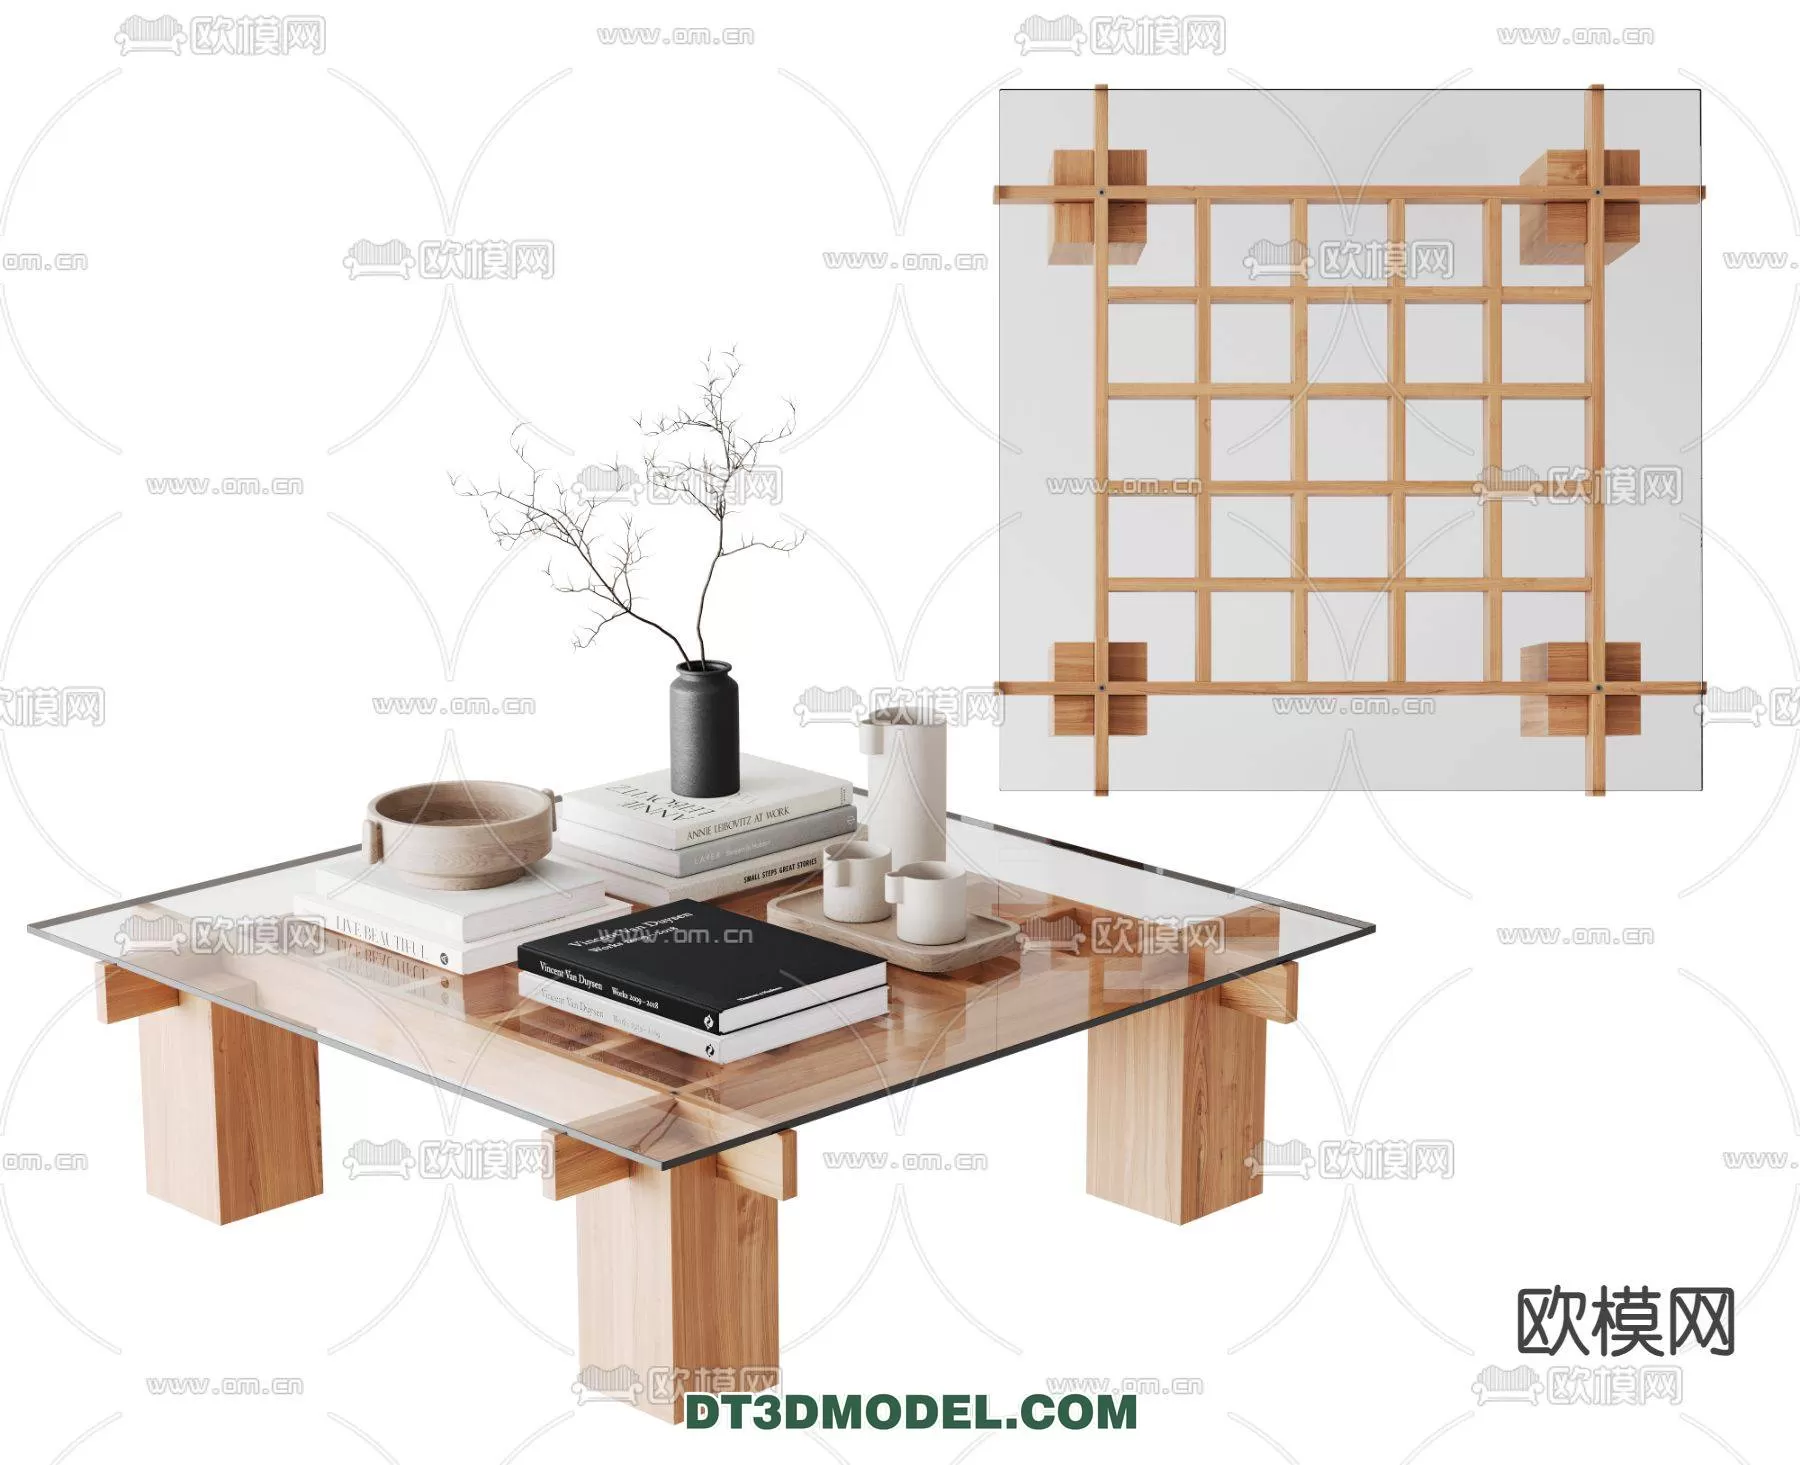 WABI SABI STYLE 3D MODELS – TEA TABLE – 0063